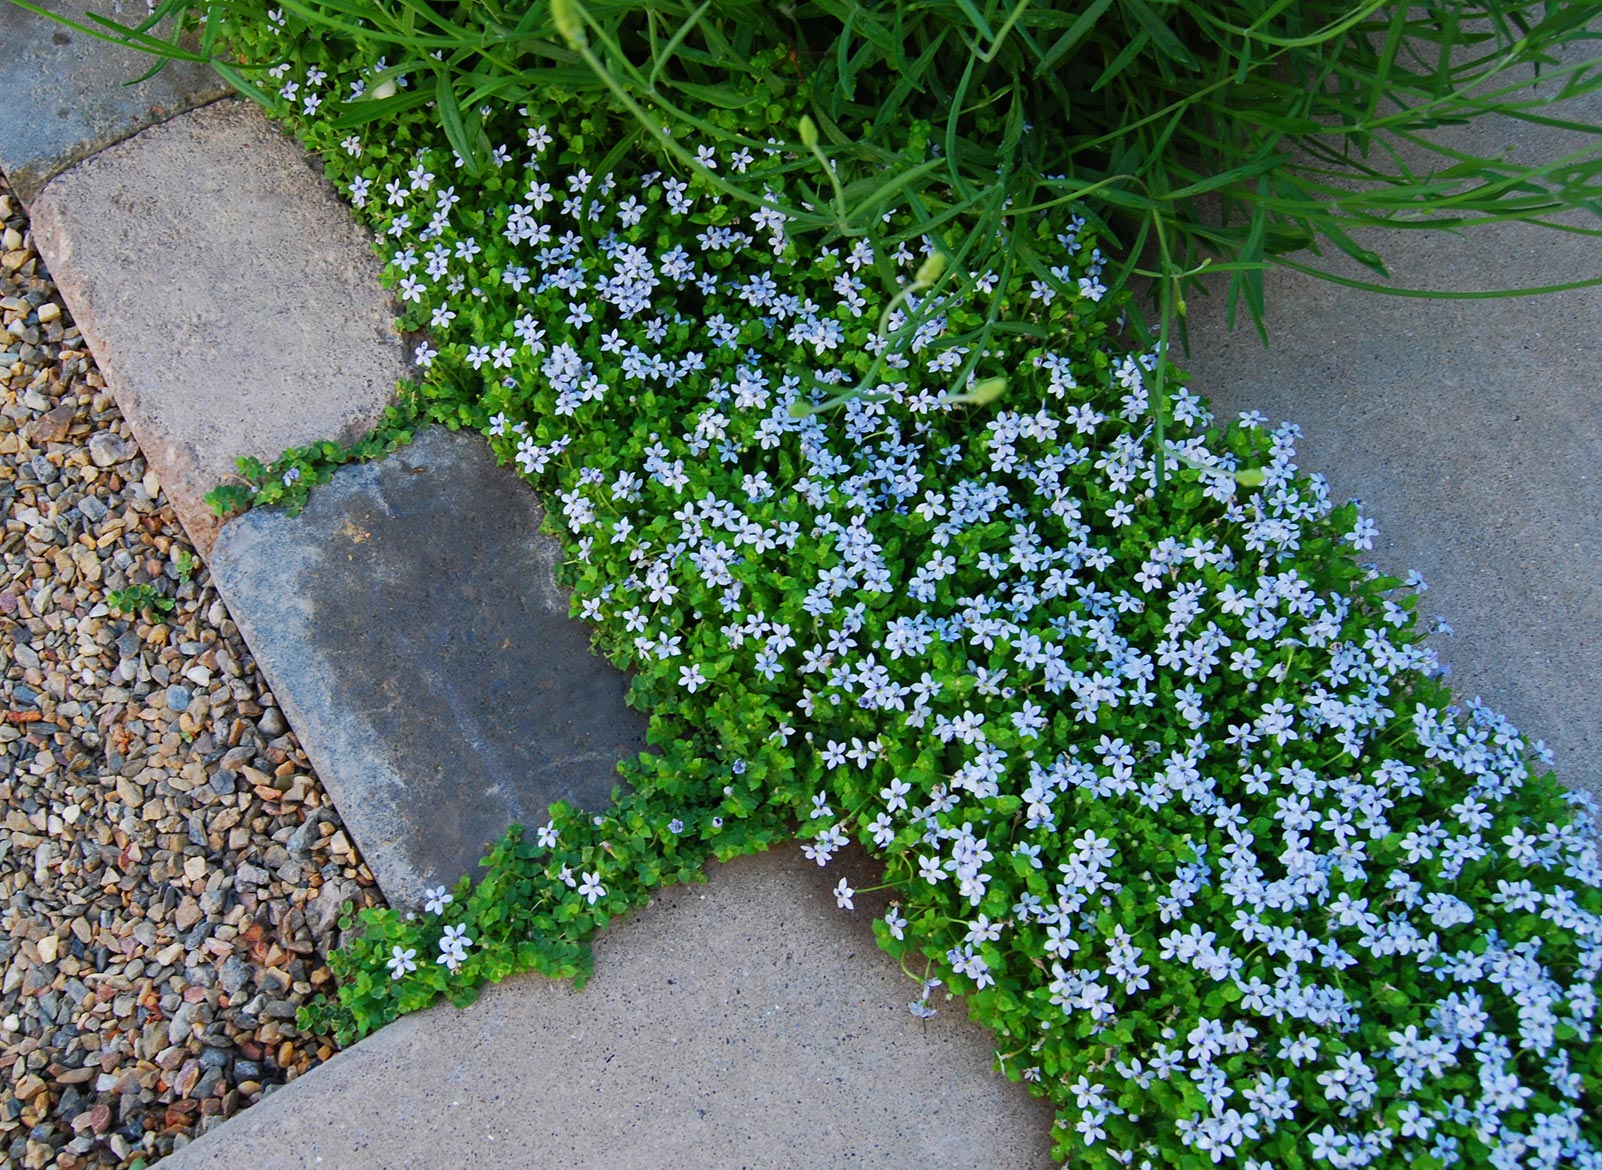 Blue star creeper (laurentia) on stone and gravel walkway